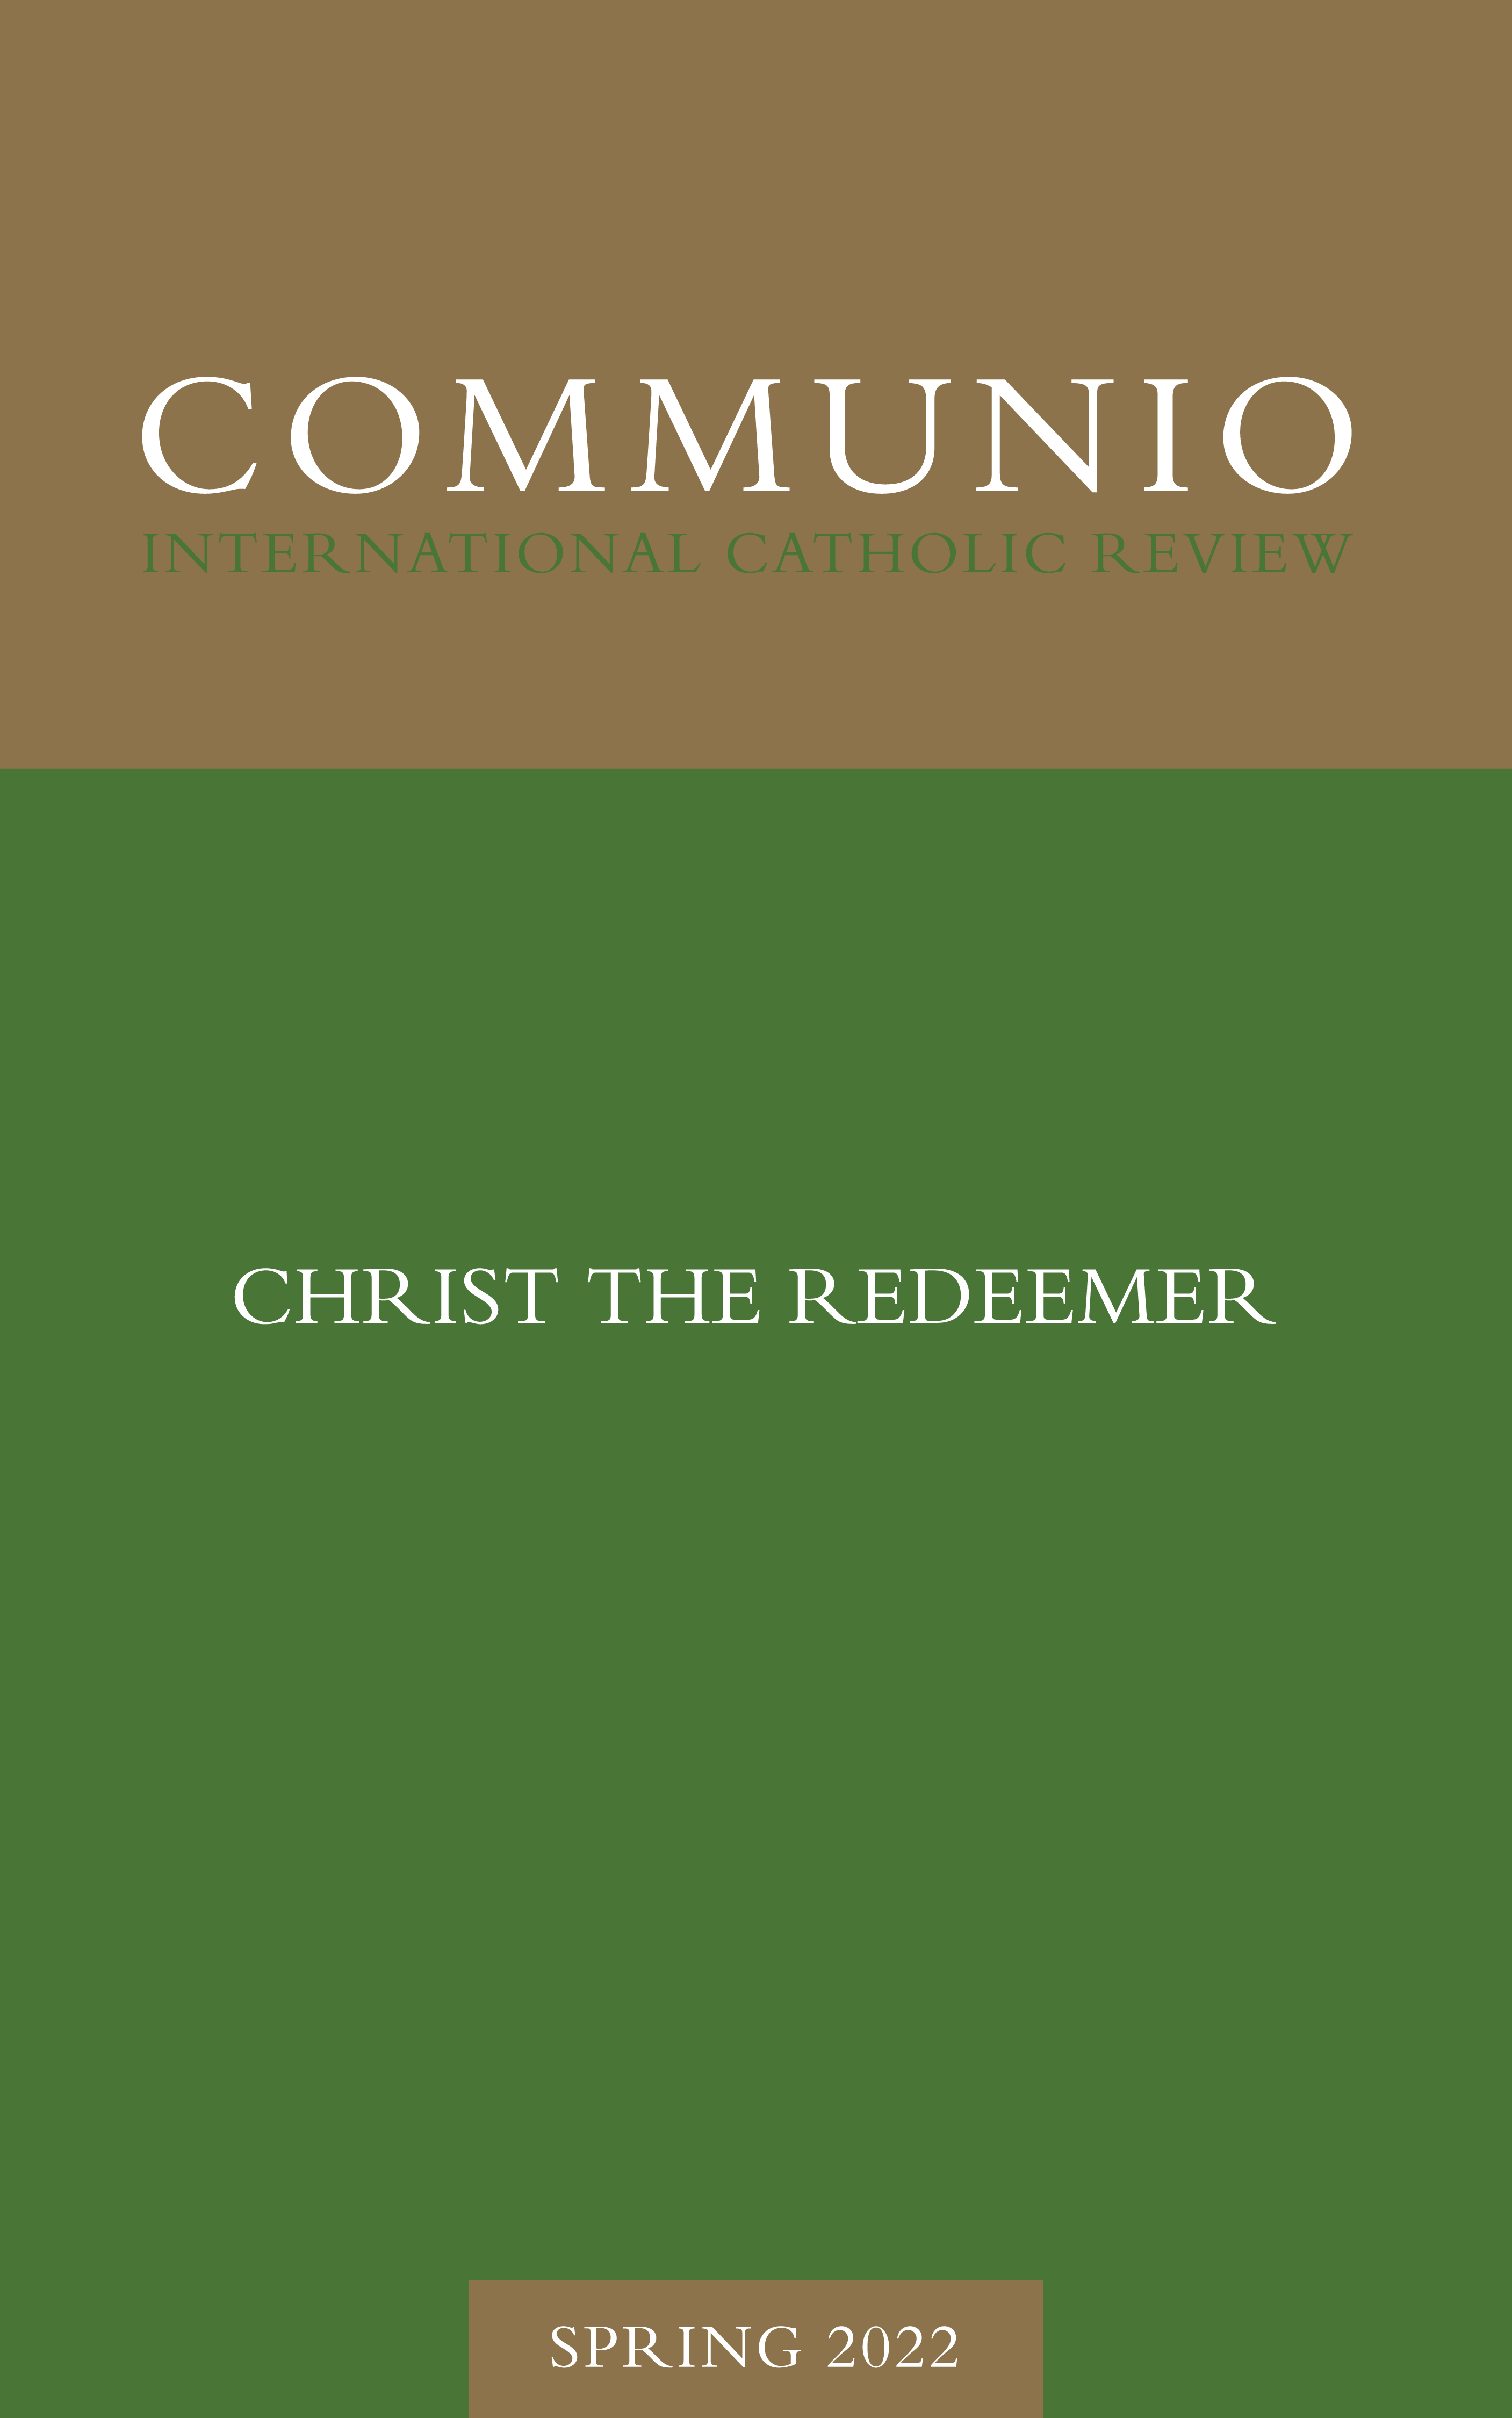 Communio - Spring 2022 - Christ the Redeemer